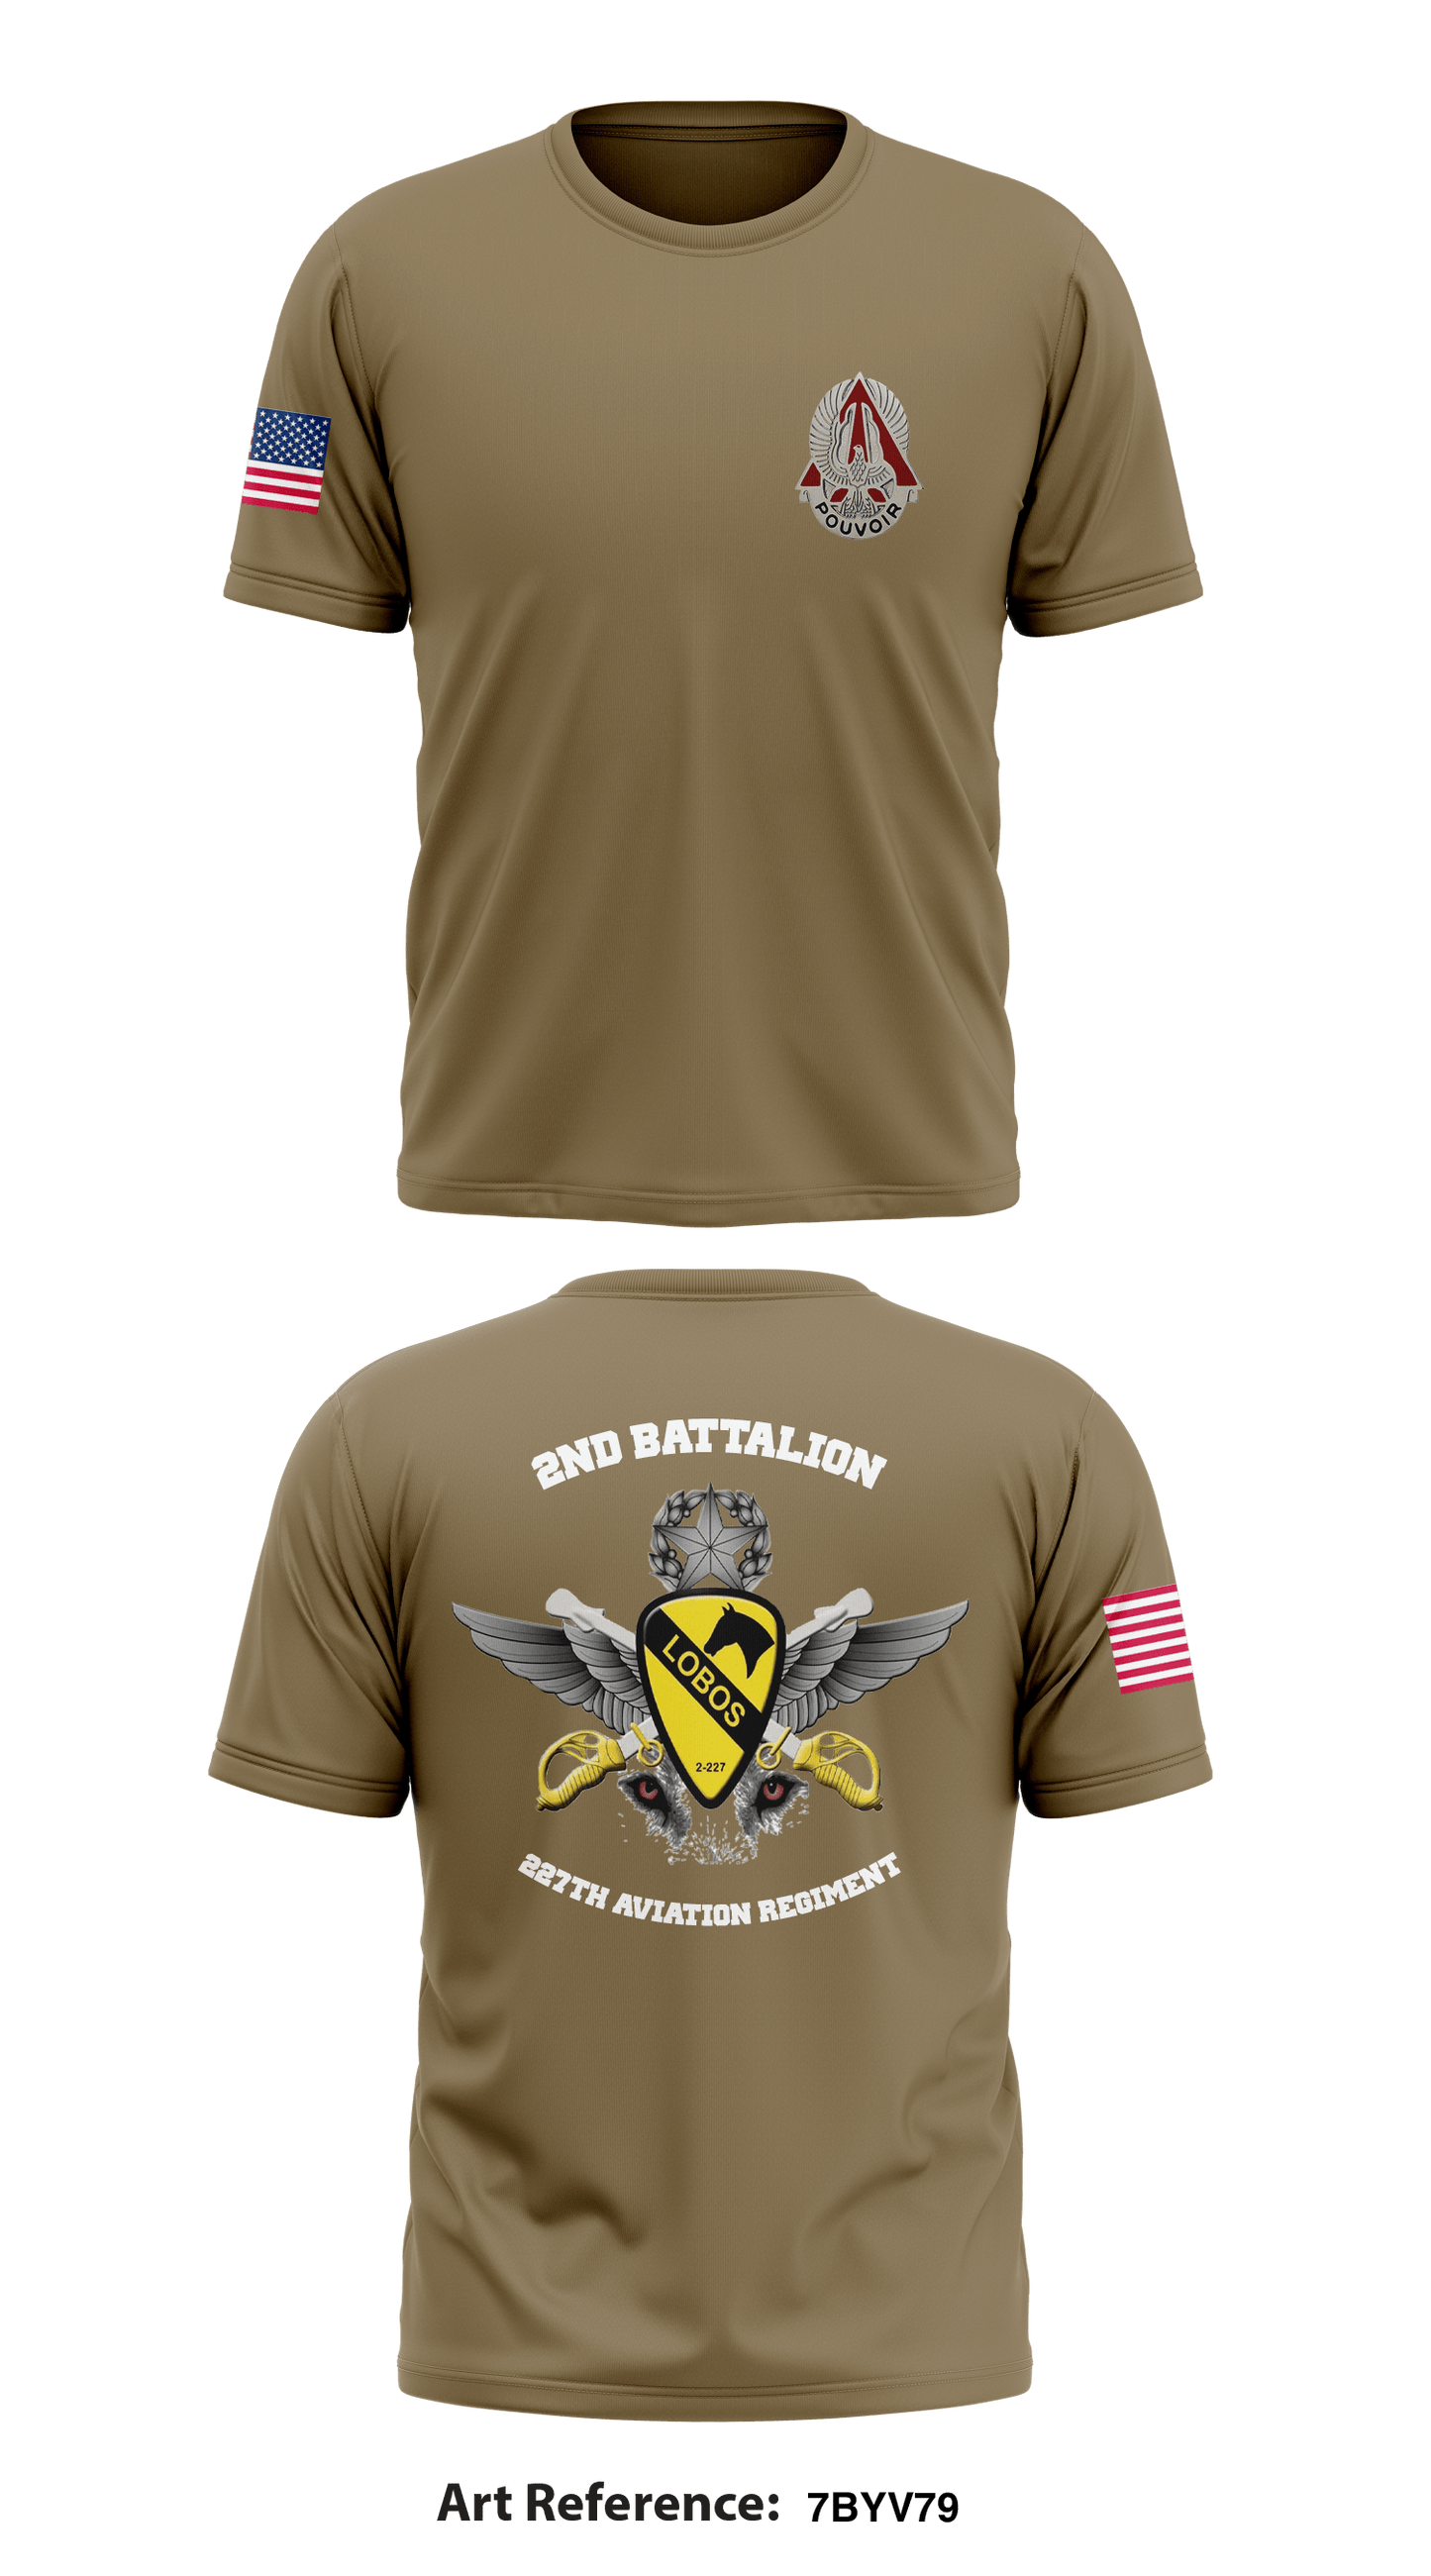 2-227 Aviation Regiment -Lobos- Core Men's SS Performance Tee - 7byv79